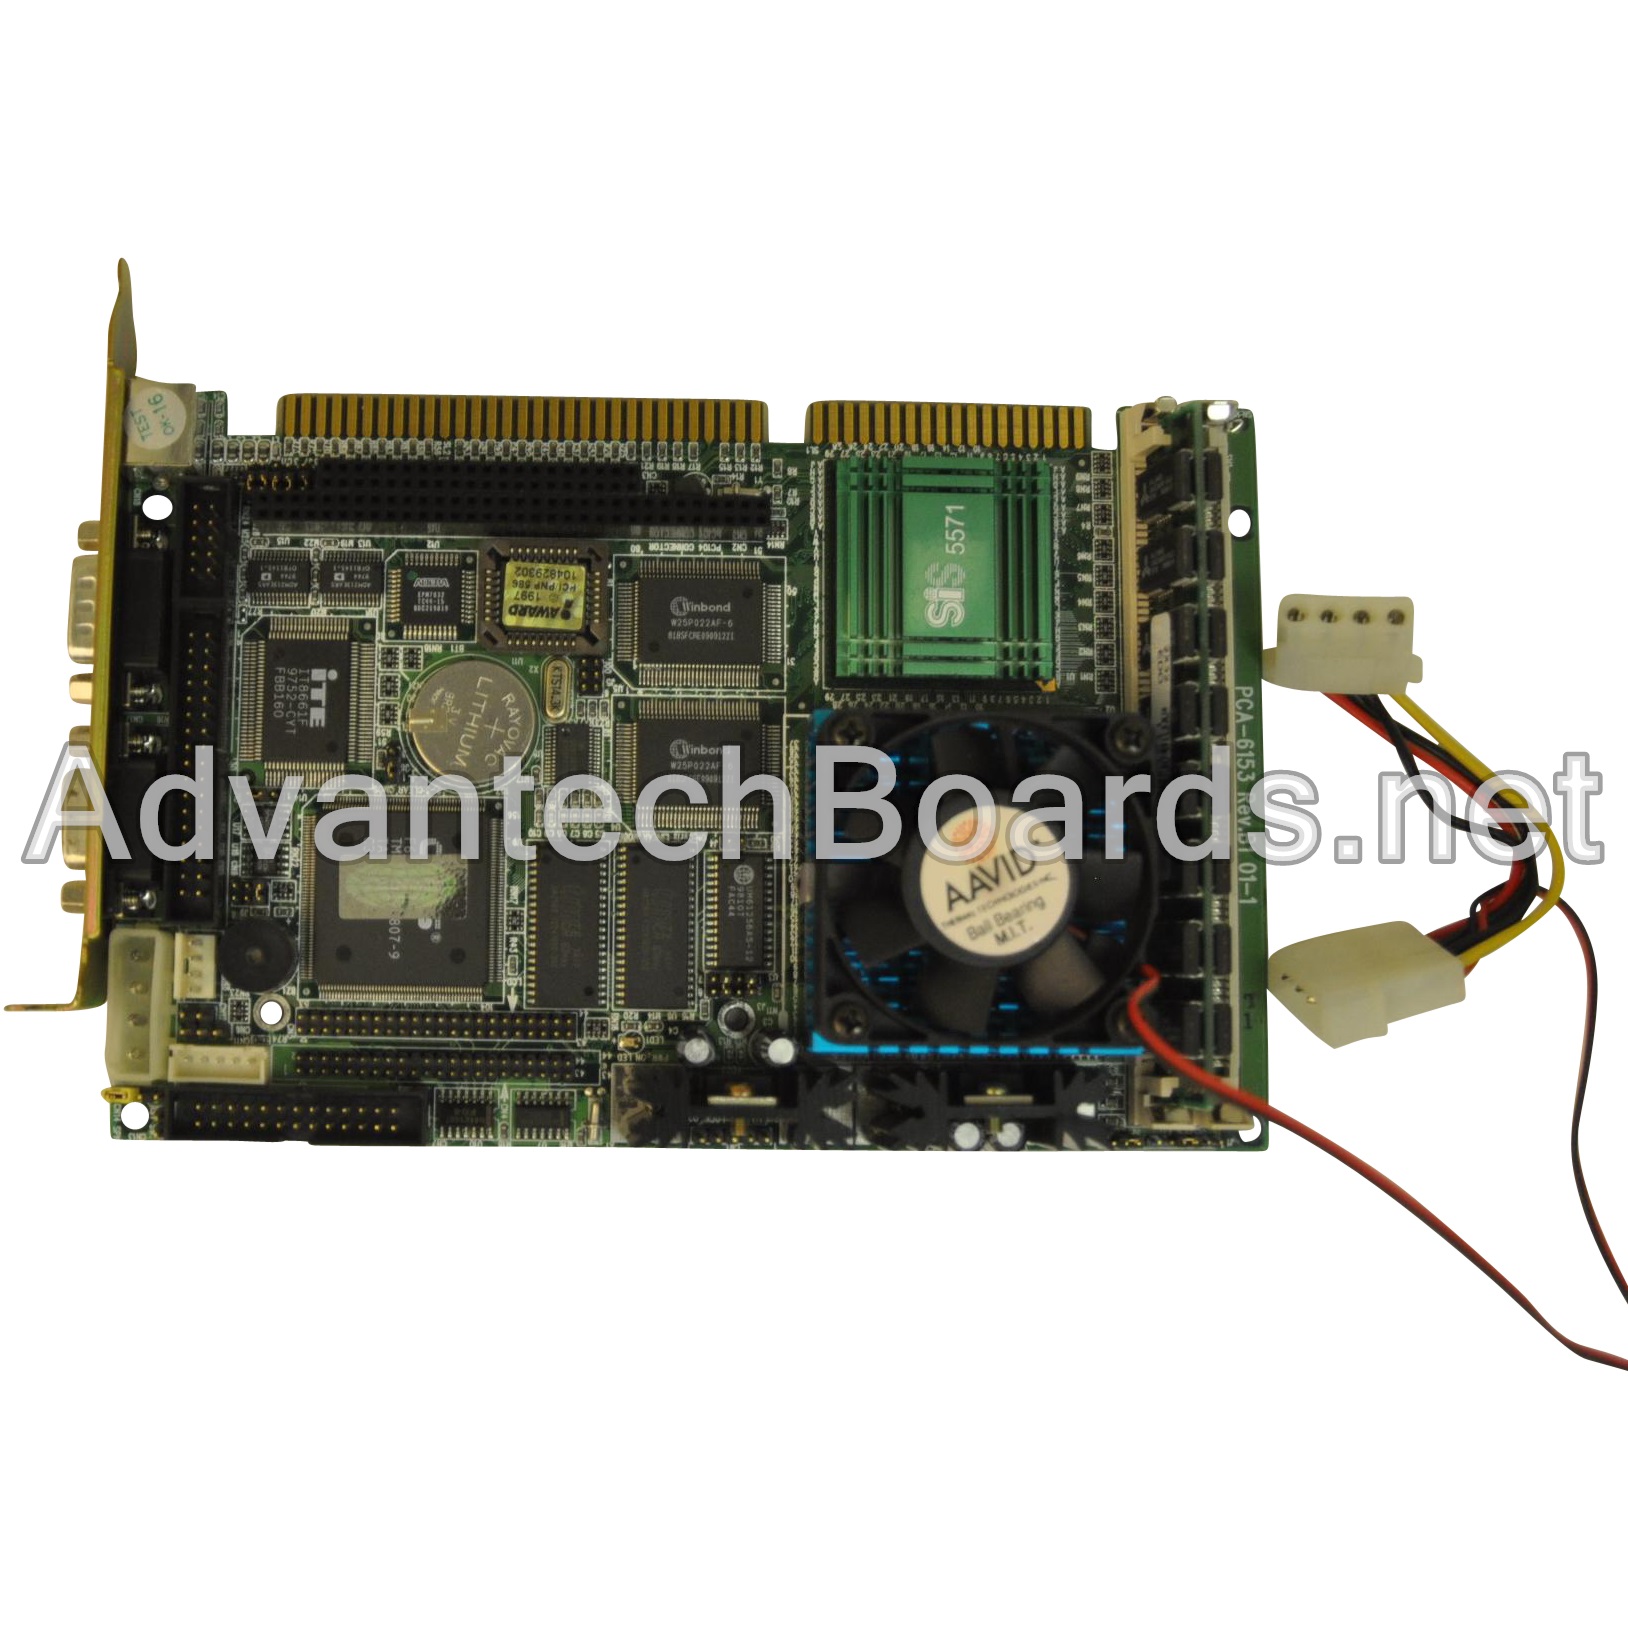 Advantech PCA-6157 Rev.A2 PENTIUM P54 CPU Card  for industry use 